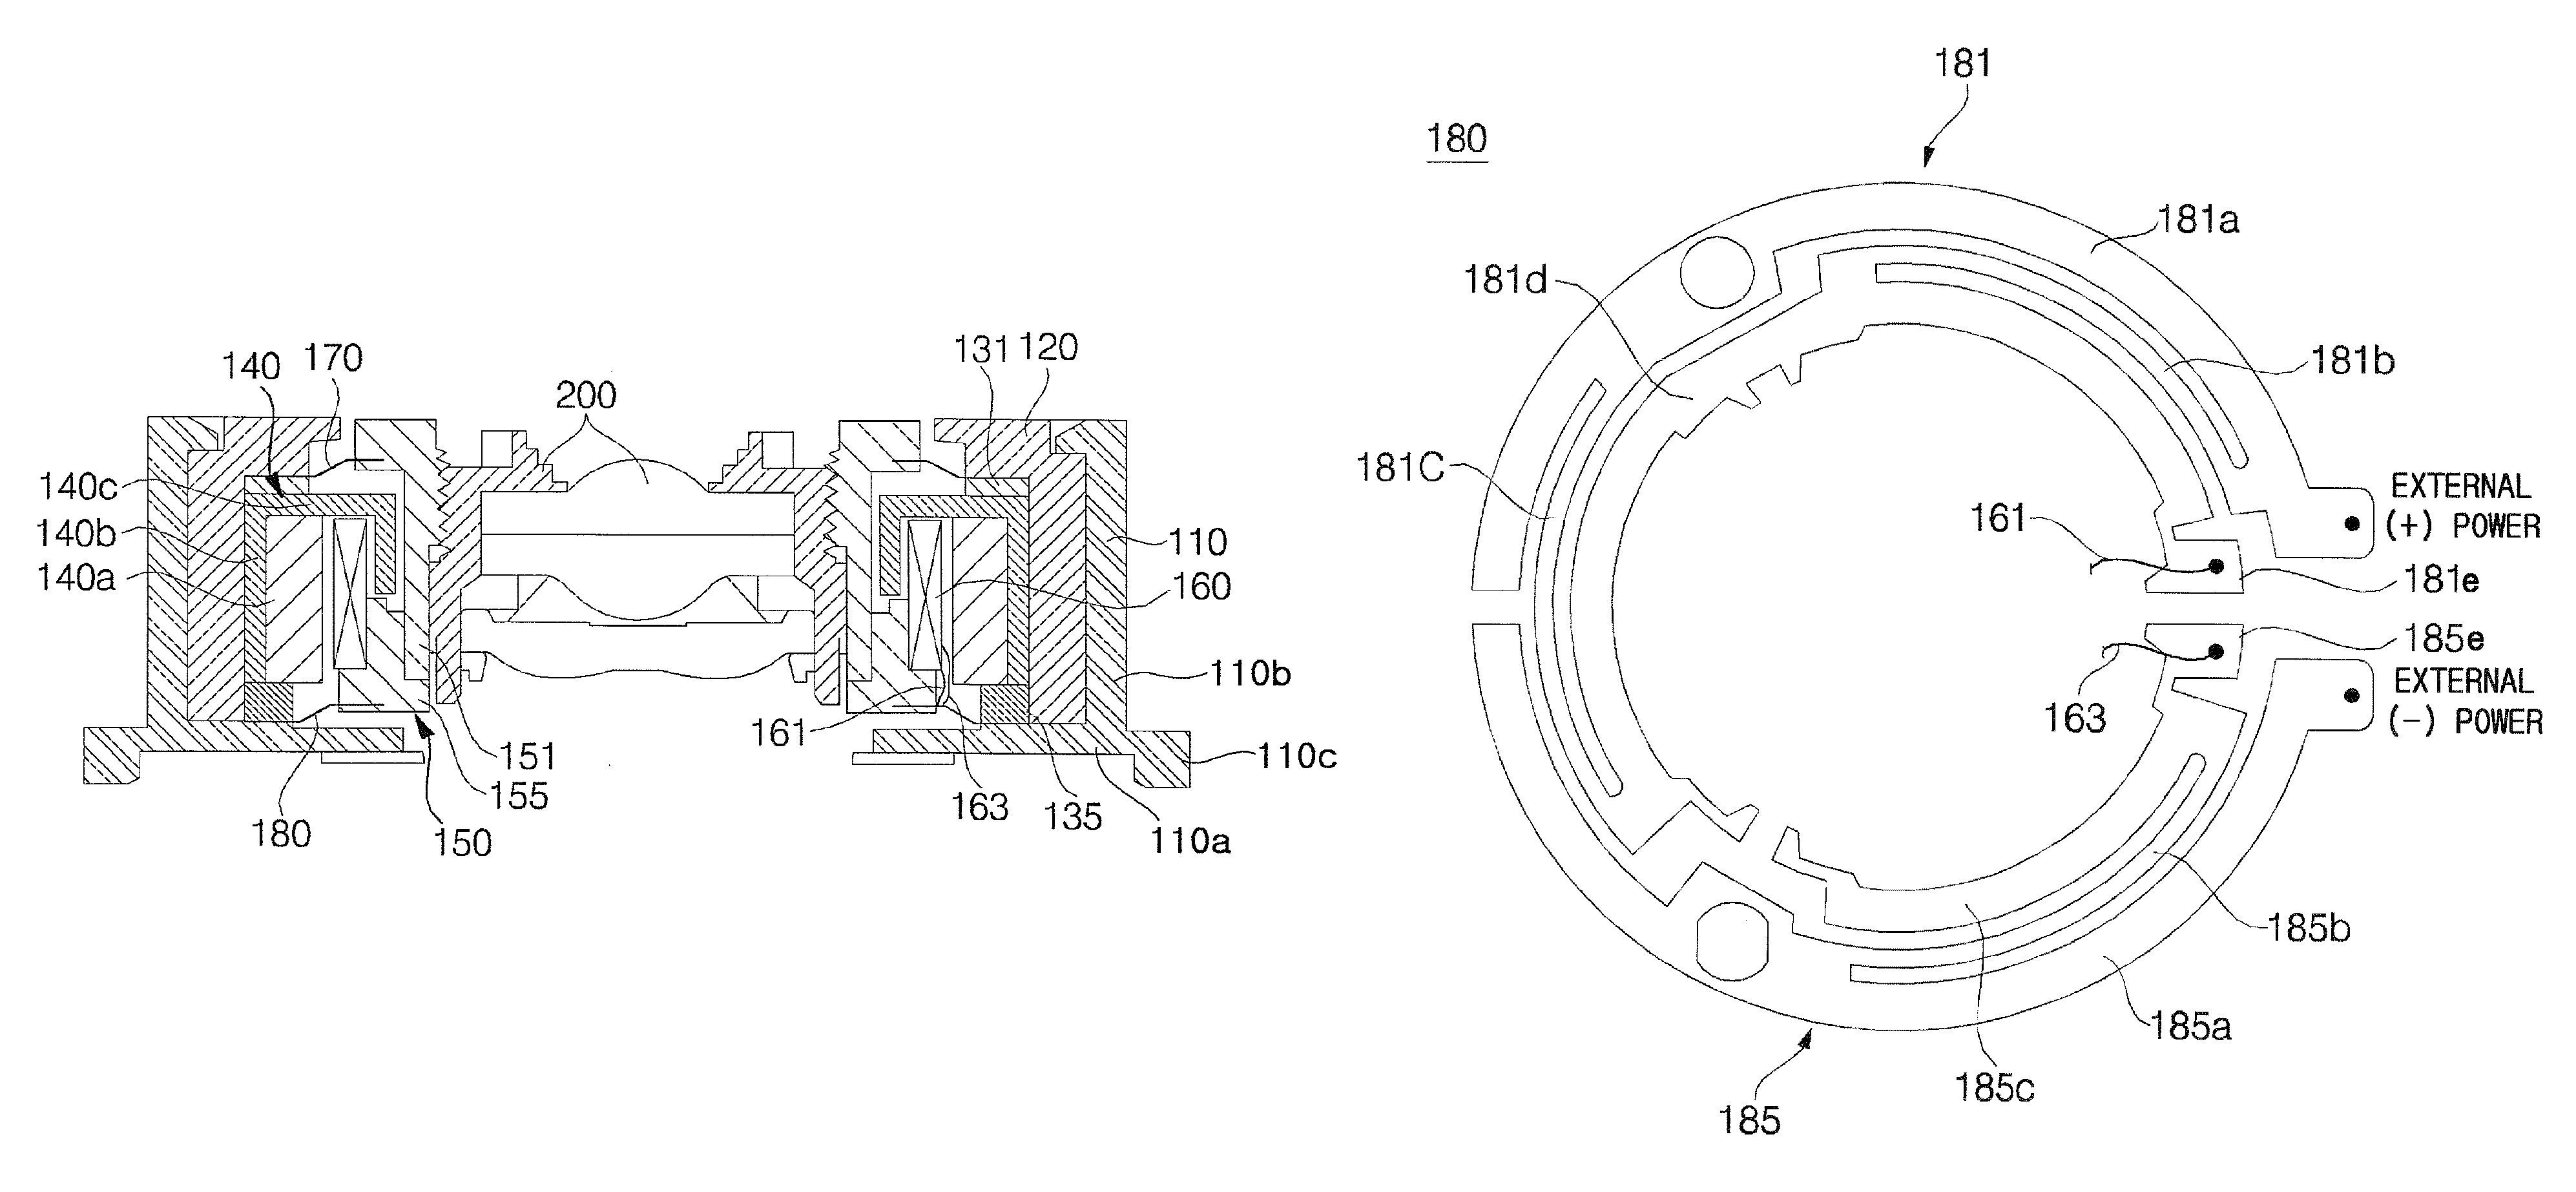 Lens driving motor and elastic member of the same